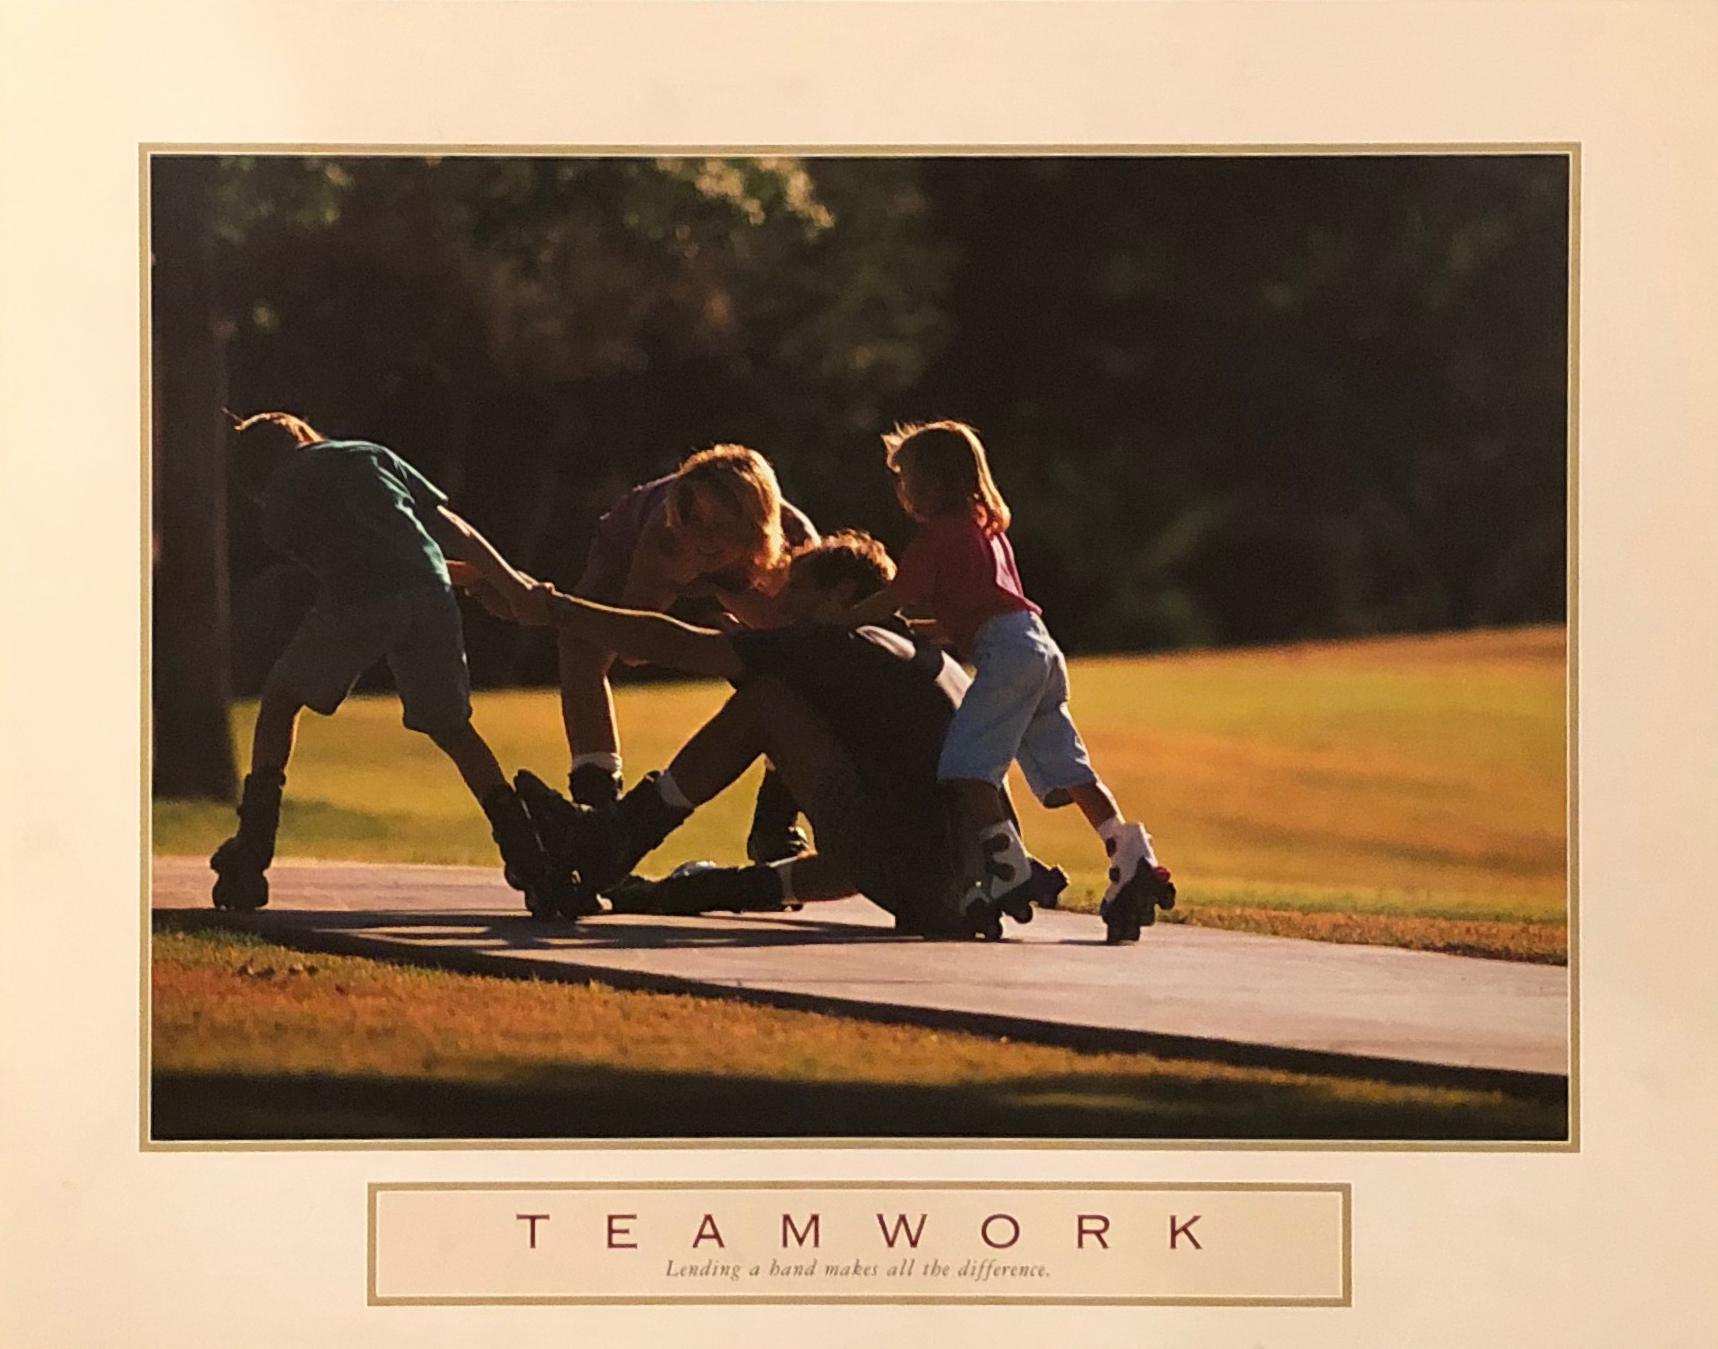 Teamwork - Family of Rollerbladers